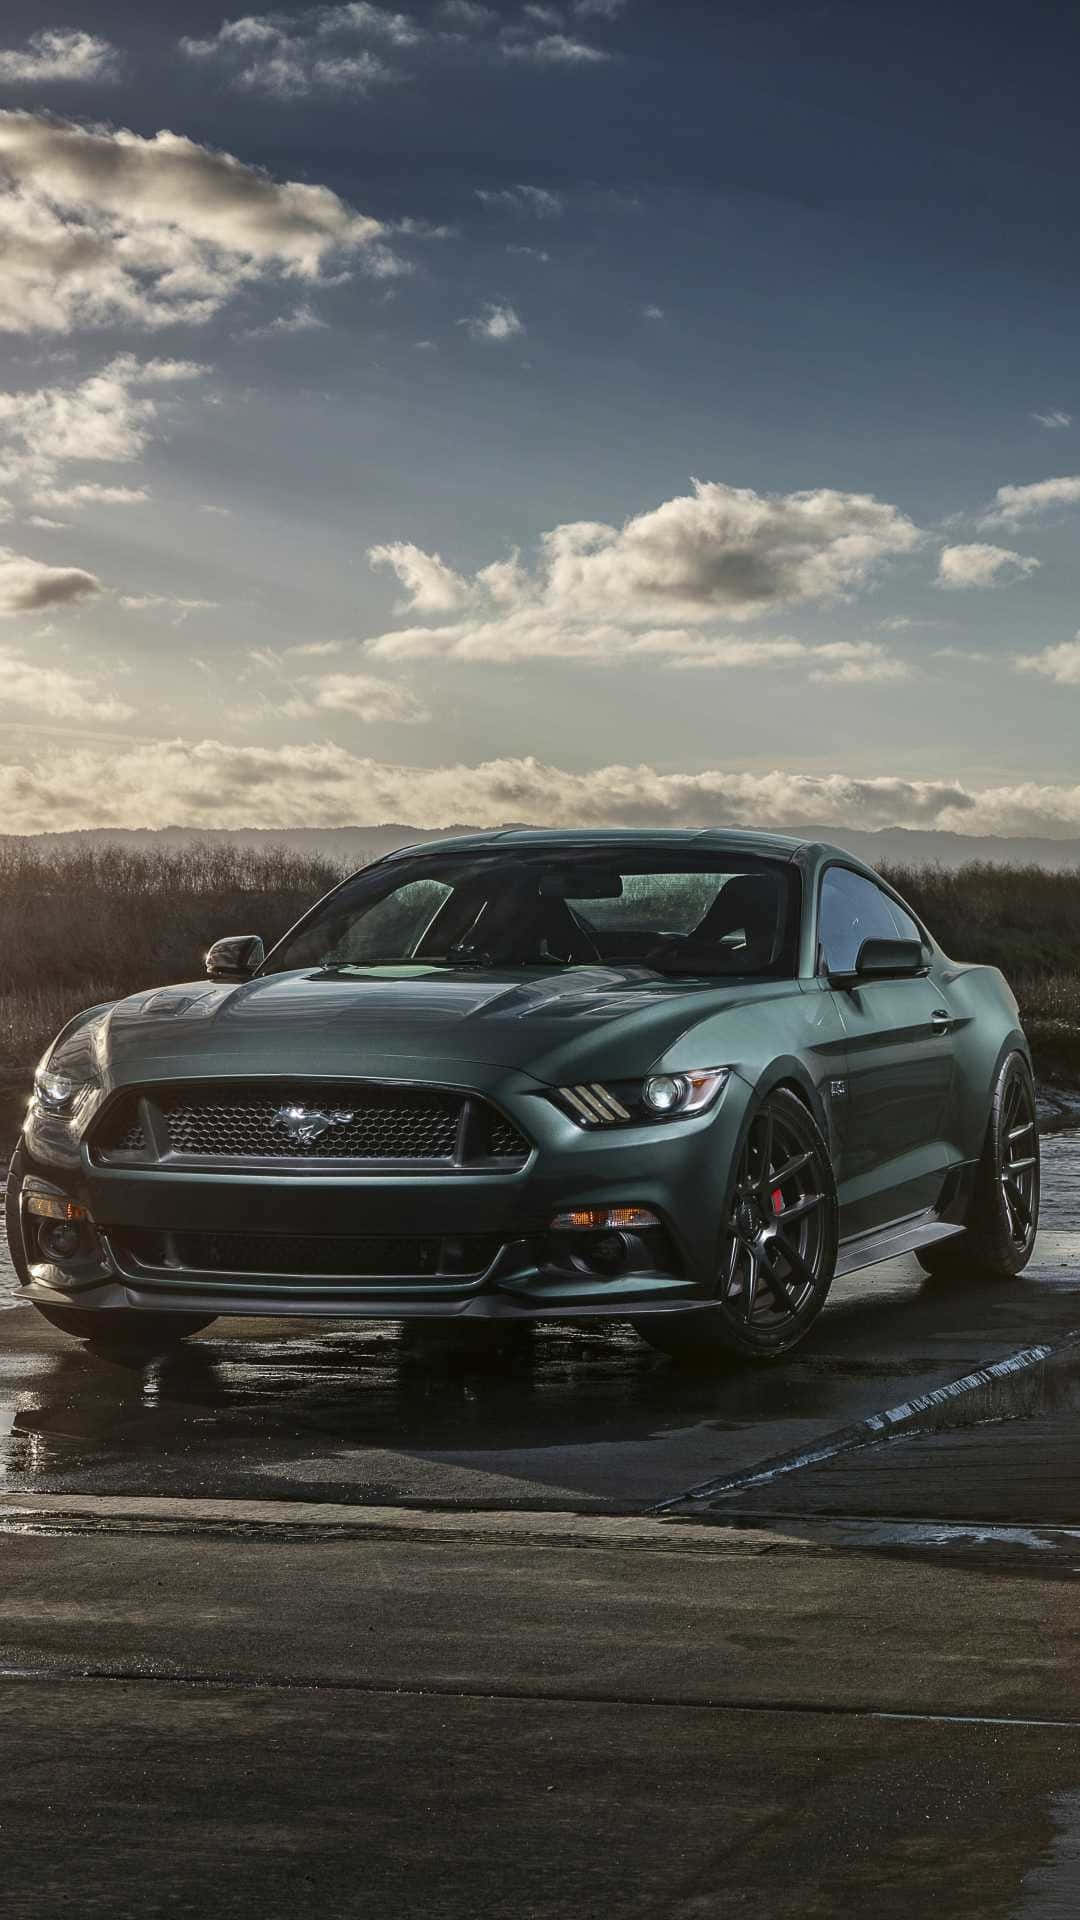 2019ford Mustang Carro Esportivo Depois Da Chuva. Papel de Parede